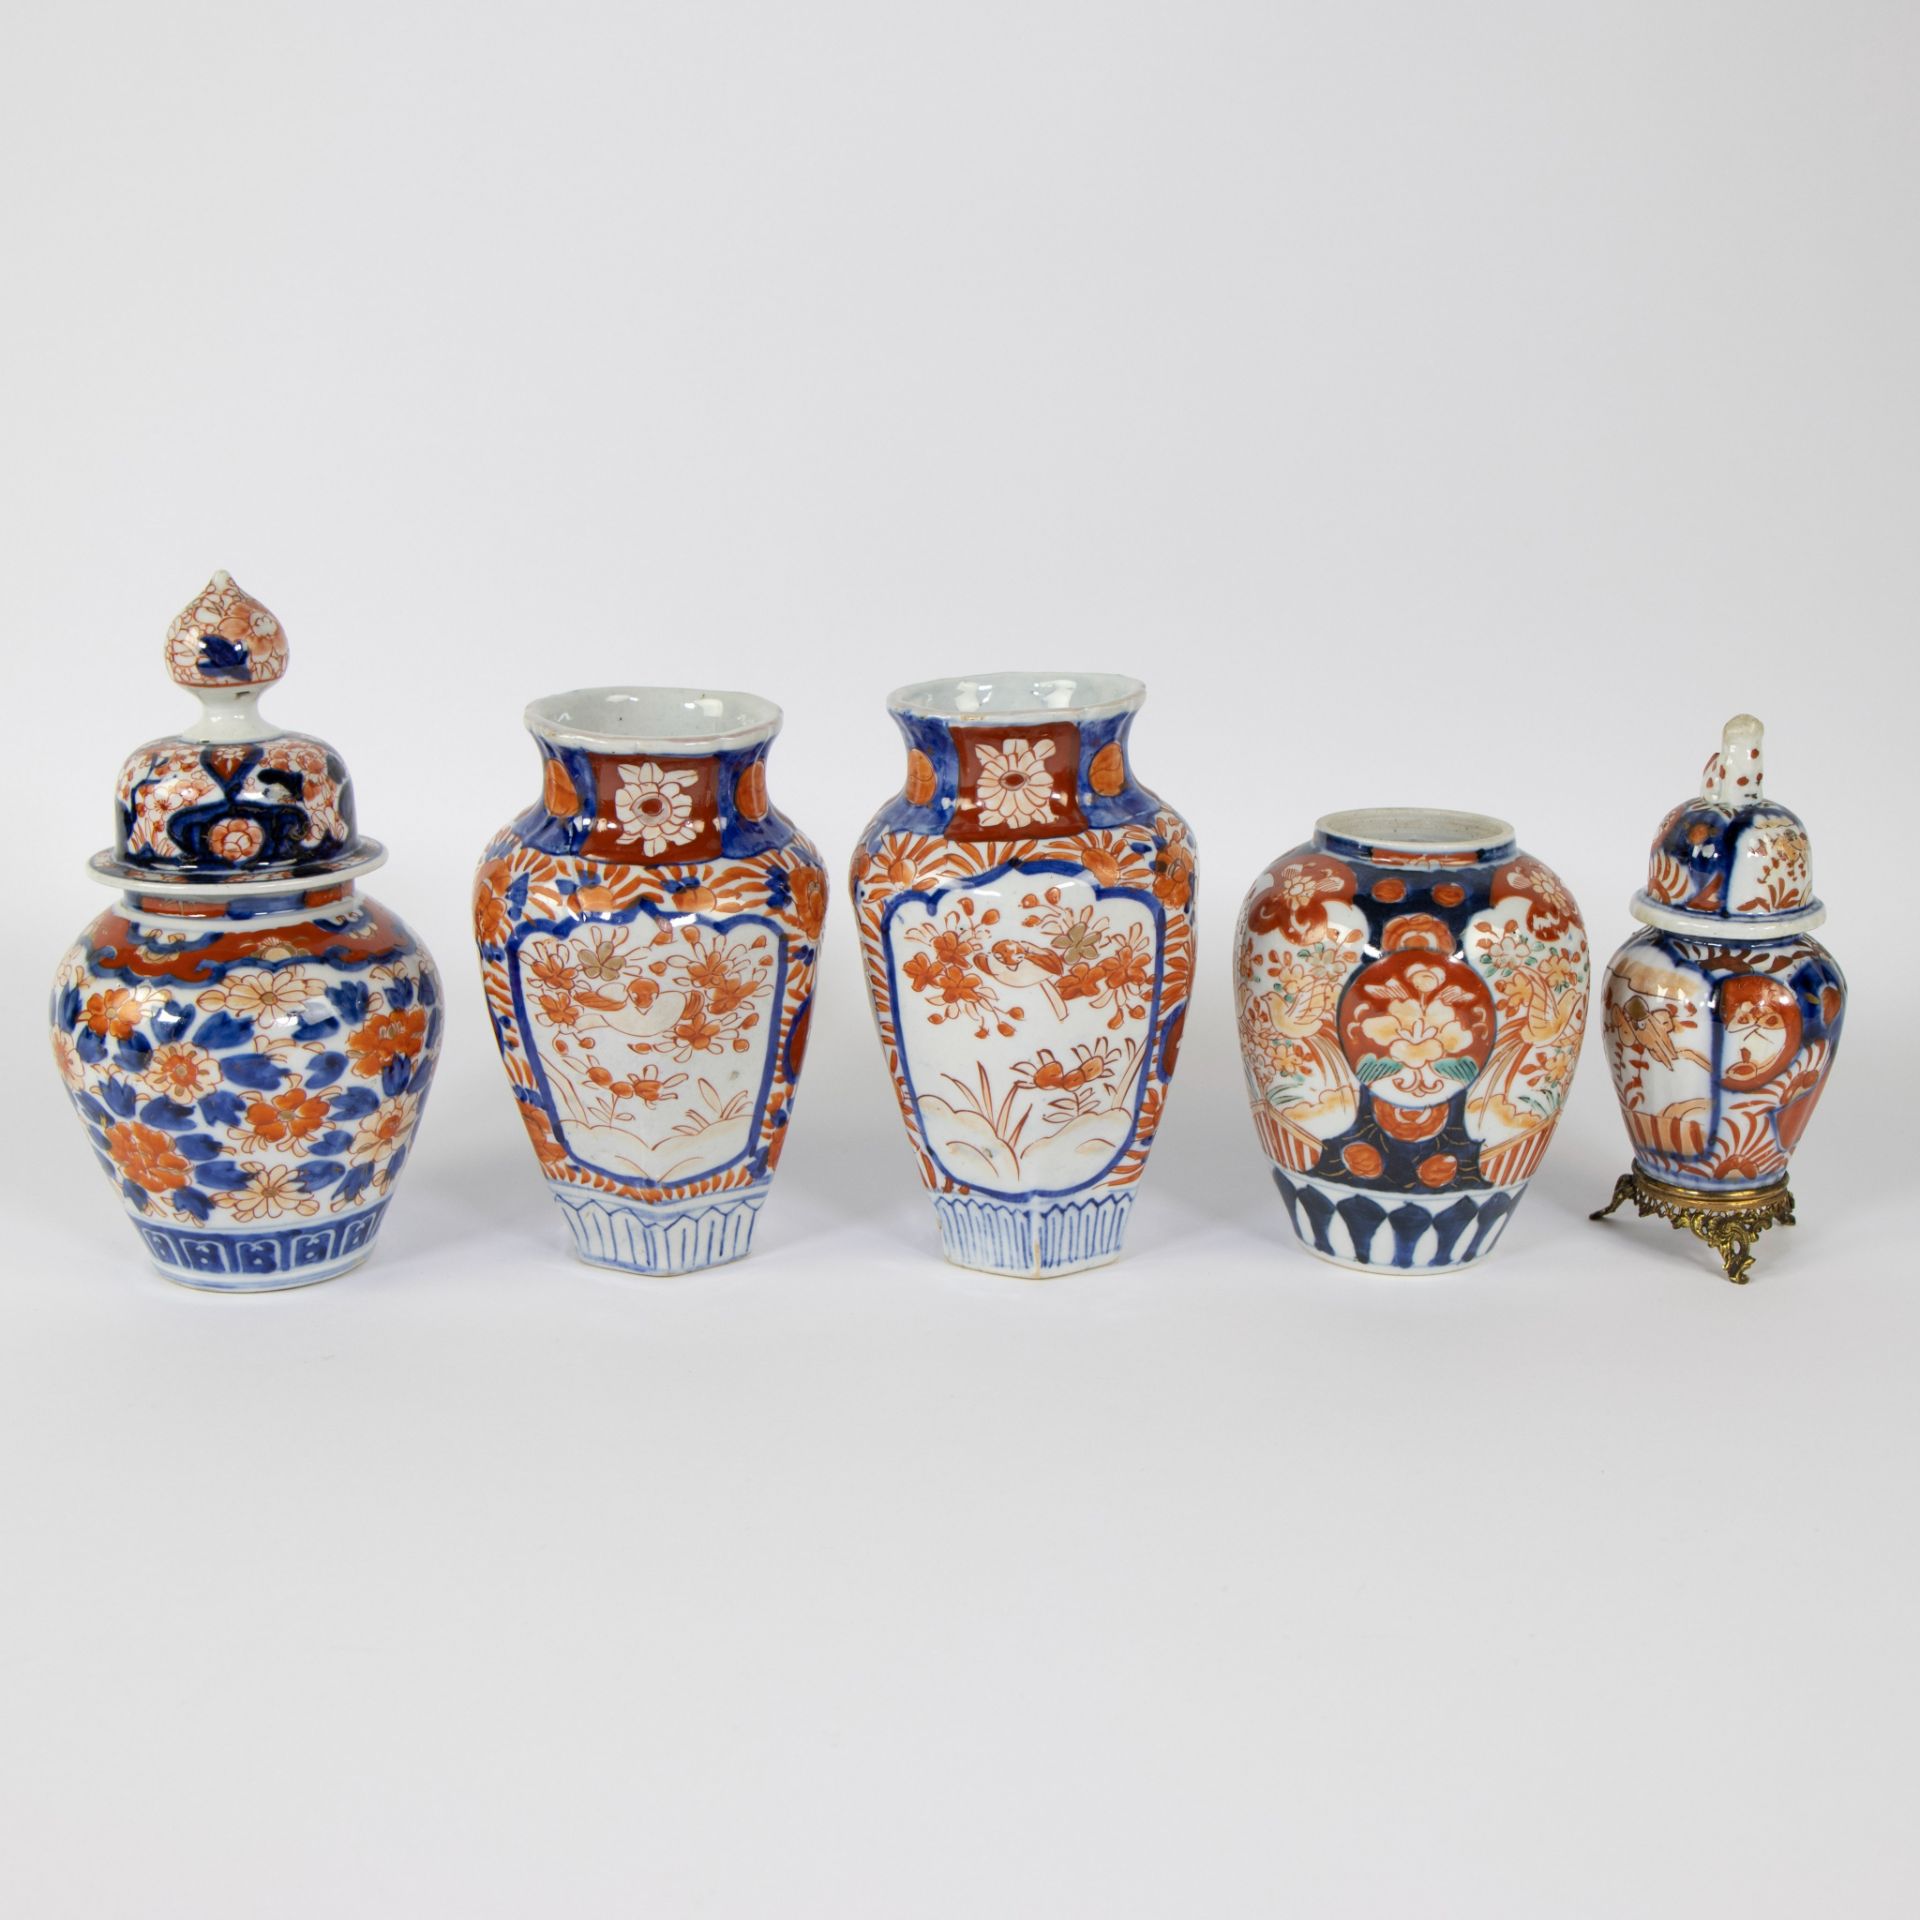 Large lot of Japanese porcelain Imari vases and lidded vases, 19th century - Image 4 of 11